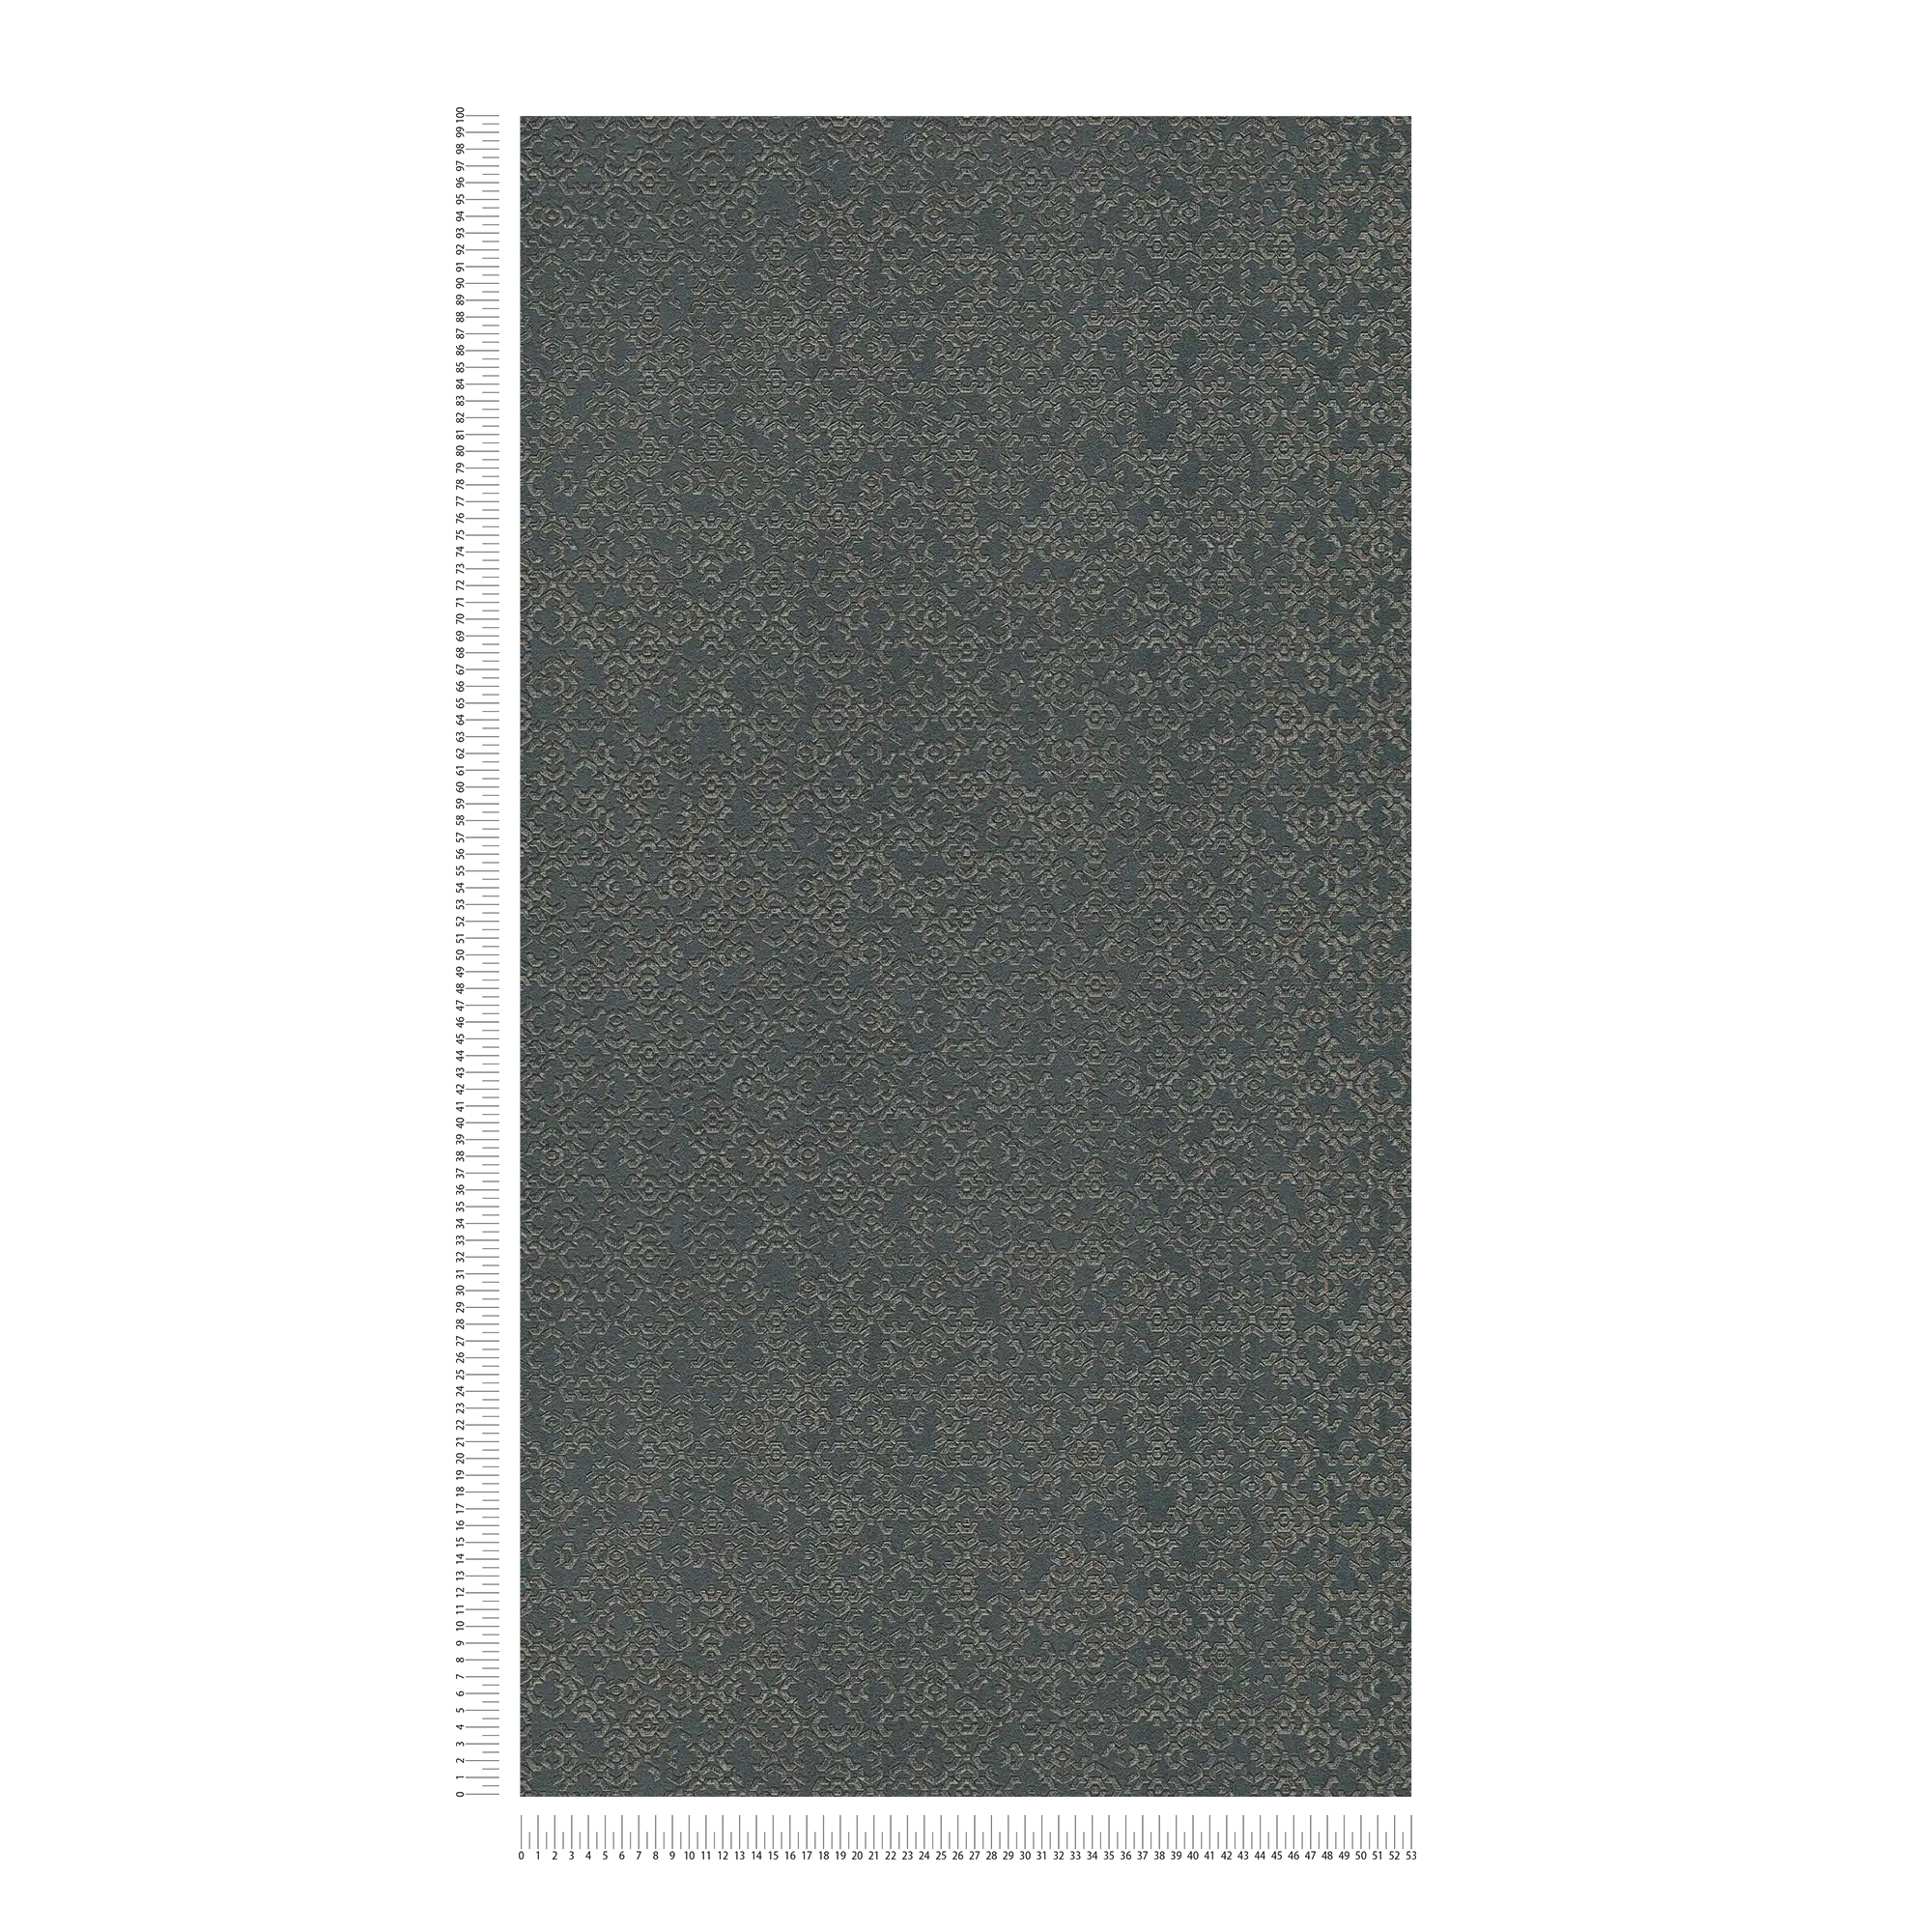             3D non-woven wallpaper with metallic effect - grey, metallic
        